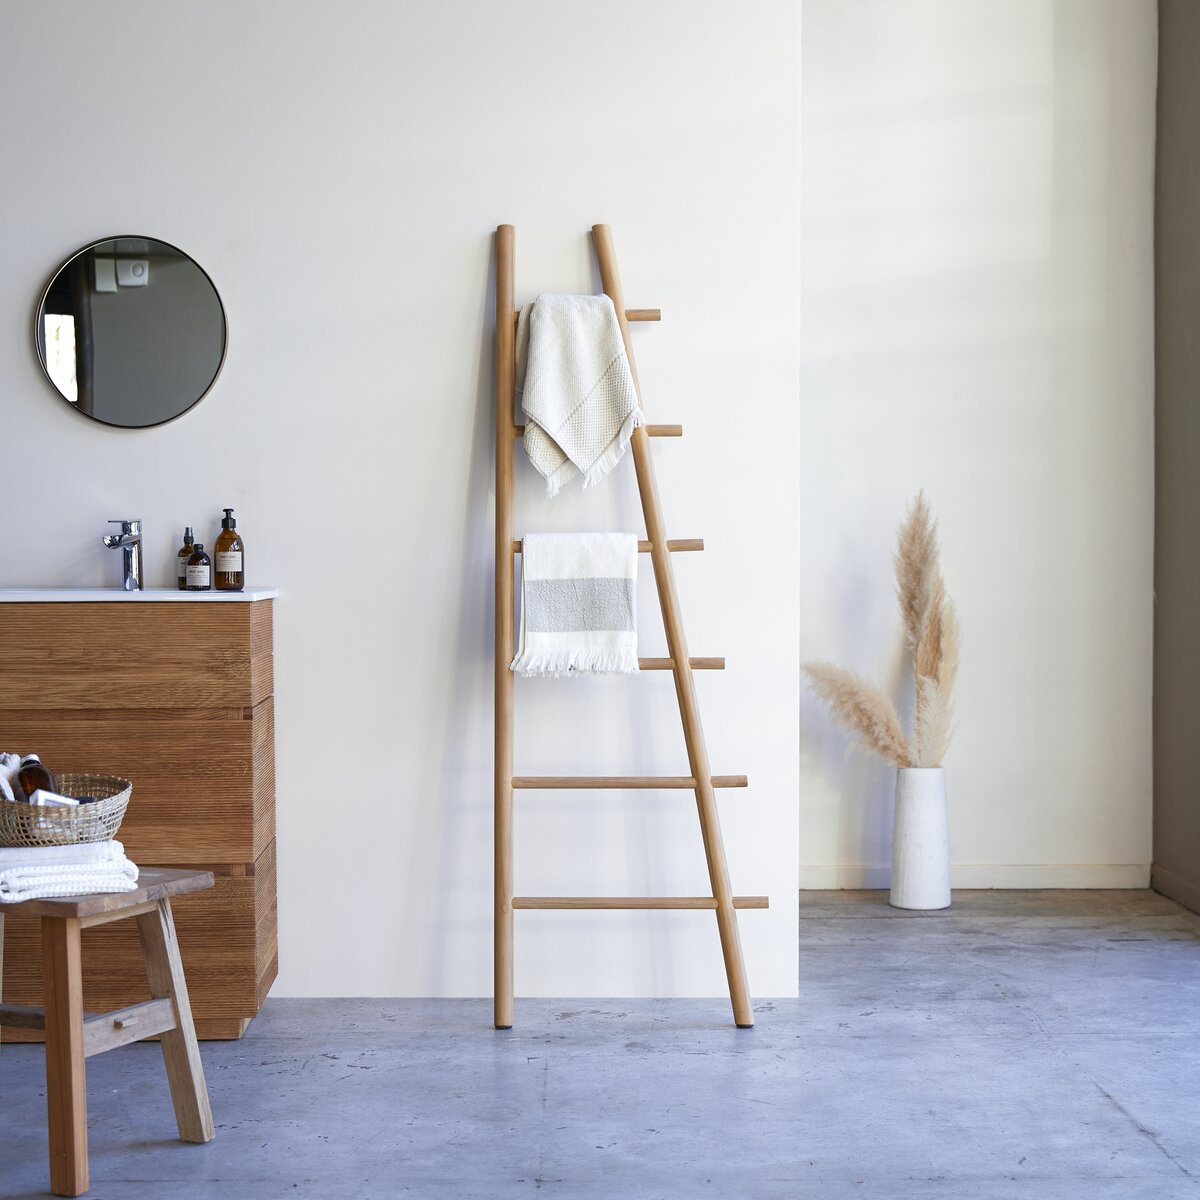 Foto: Escalera como Toallero en Baño de Domeniconi Design #377926